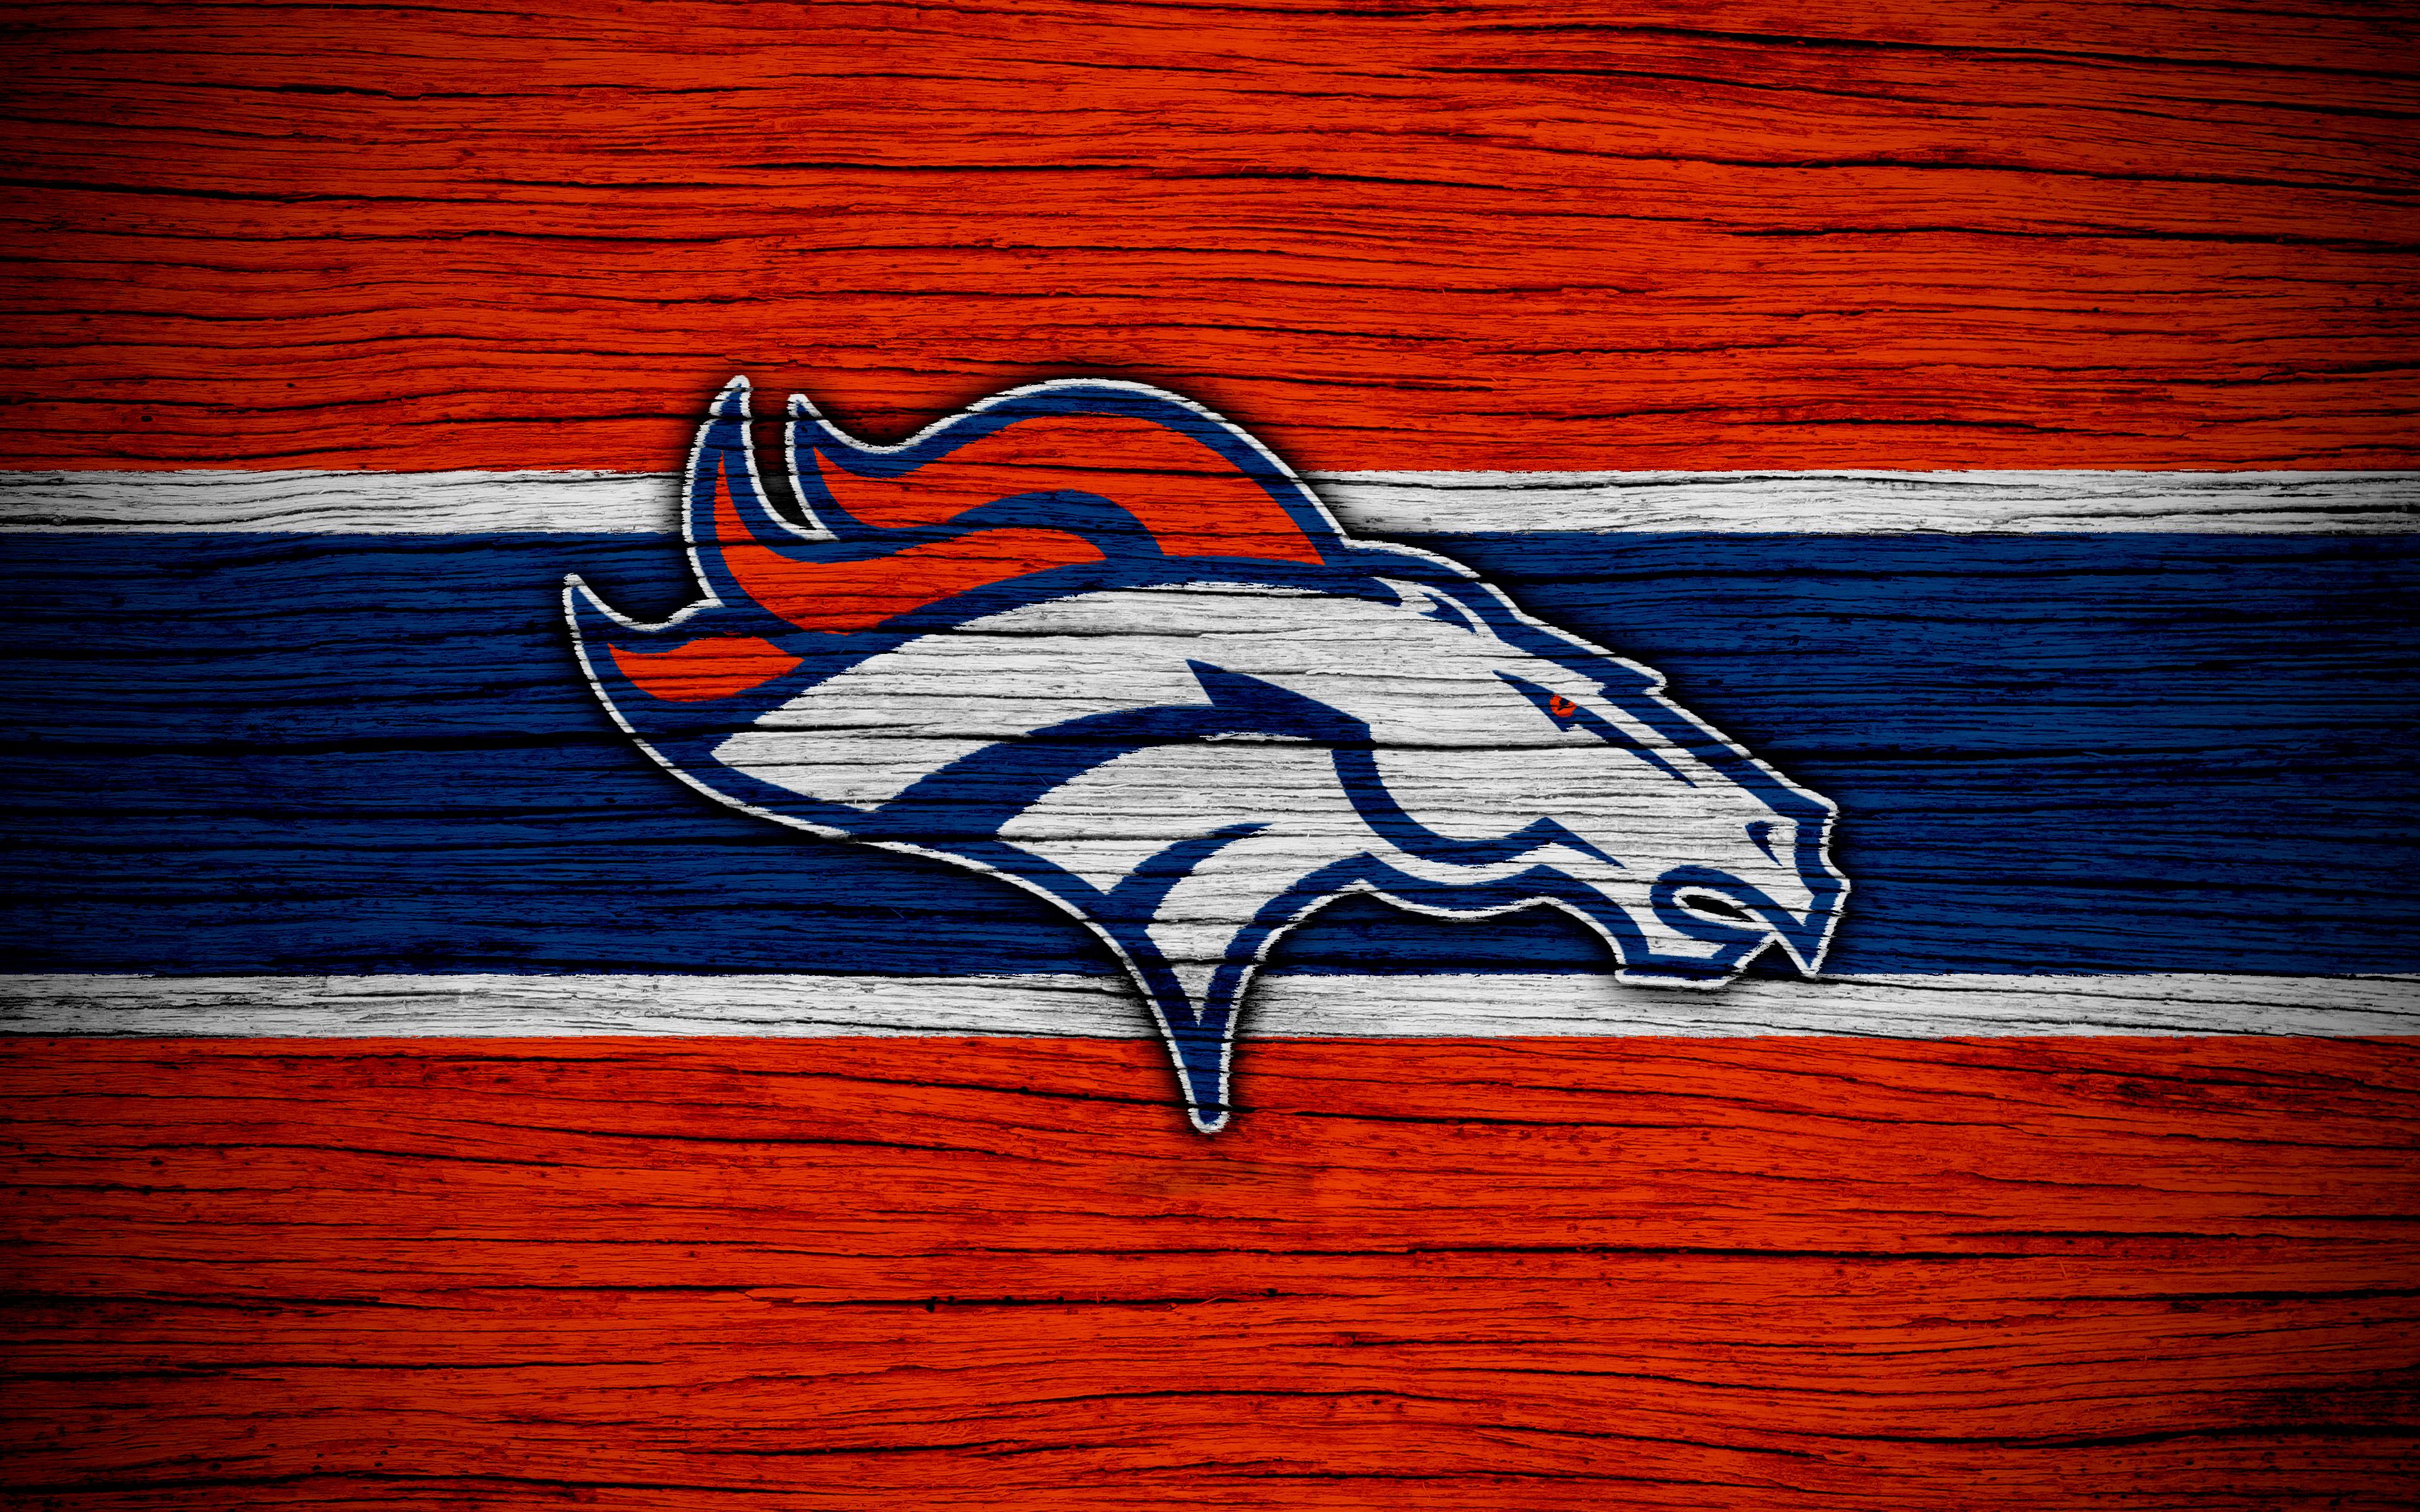 Denver Broncos on Twitter Desktop tablet and mobile device Broncos  wallpapers Something youd be interested in httptcort9wnJhEBB  httptco4DDB8kHb1C  Twitter